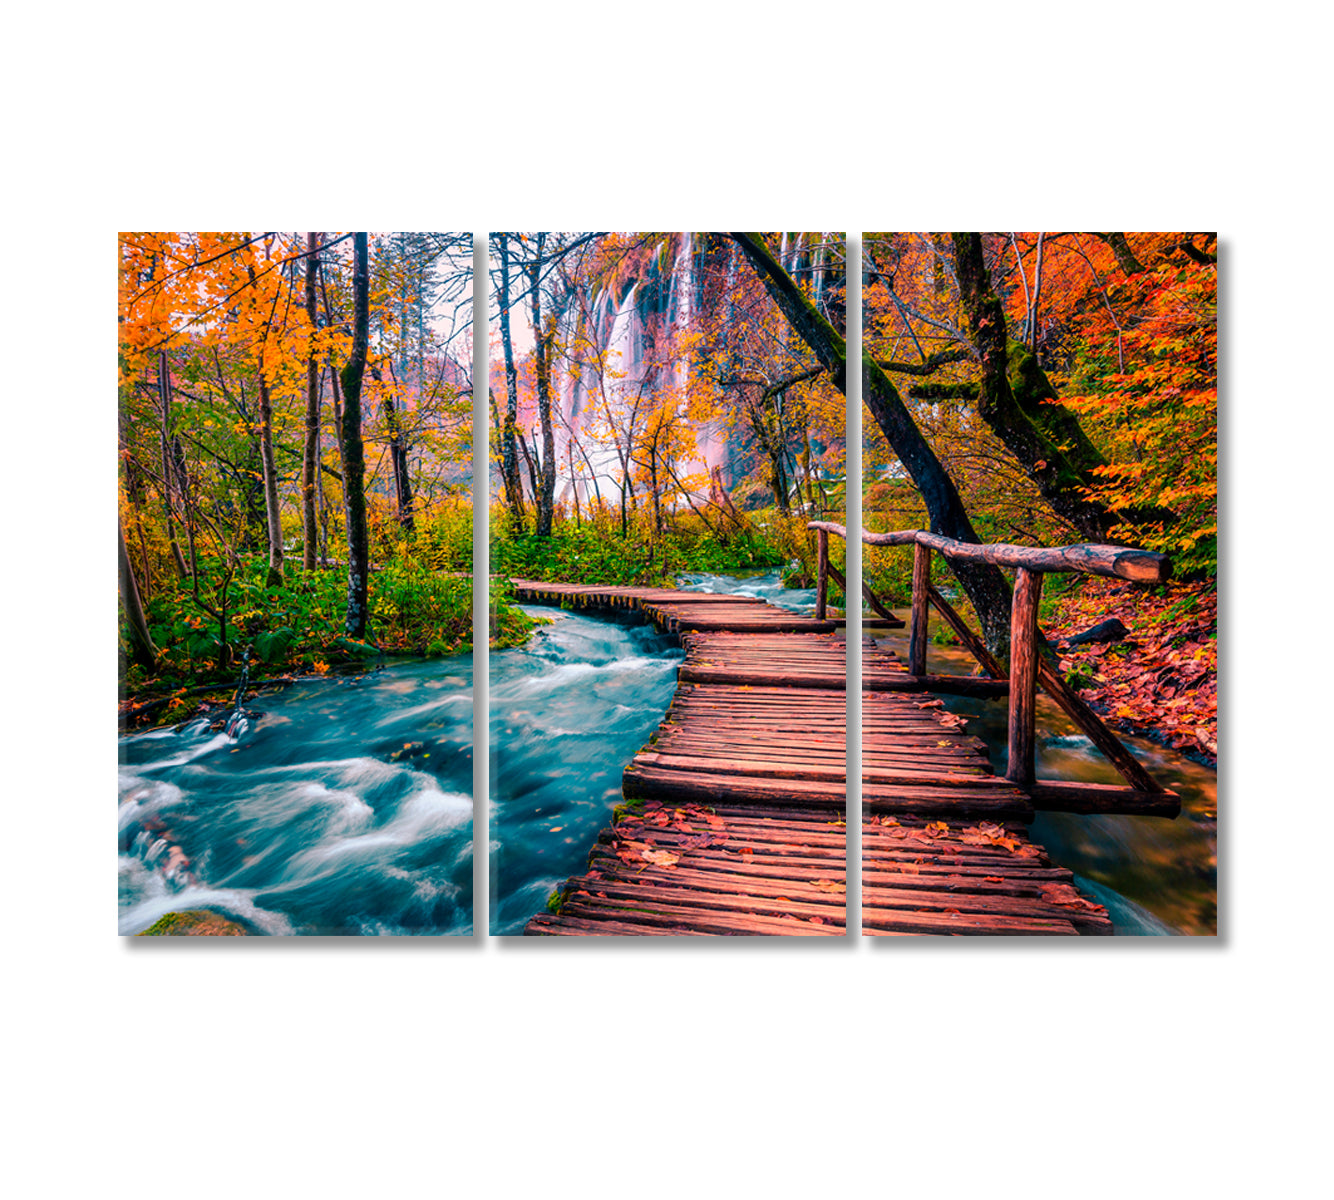 Wooden Bridge and Waterfalls in Plitvice National Park Croatia Canvas Print-Canvas Print-CetArt-3 Panels-36x24 inches-CetArt